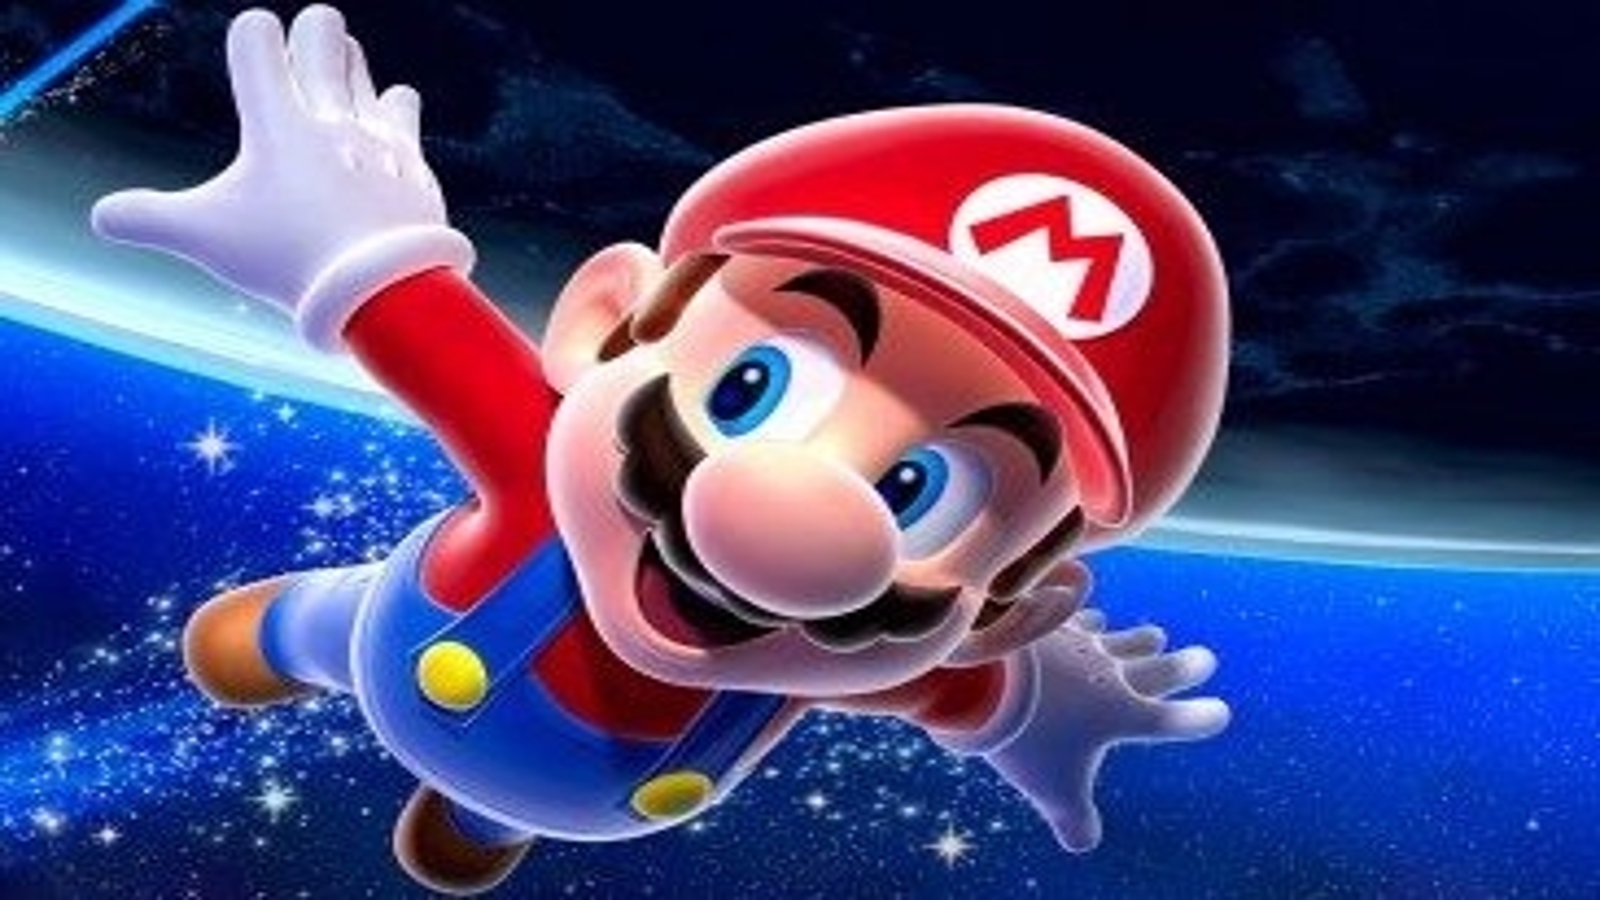 Gravity-Bending Retro Games : Jelly Mario Bros.